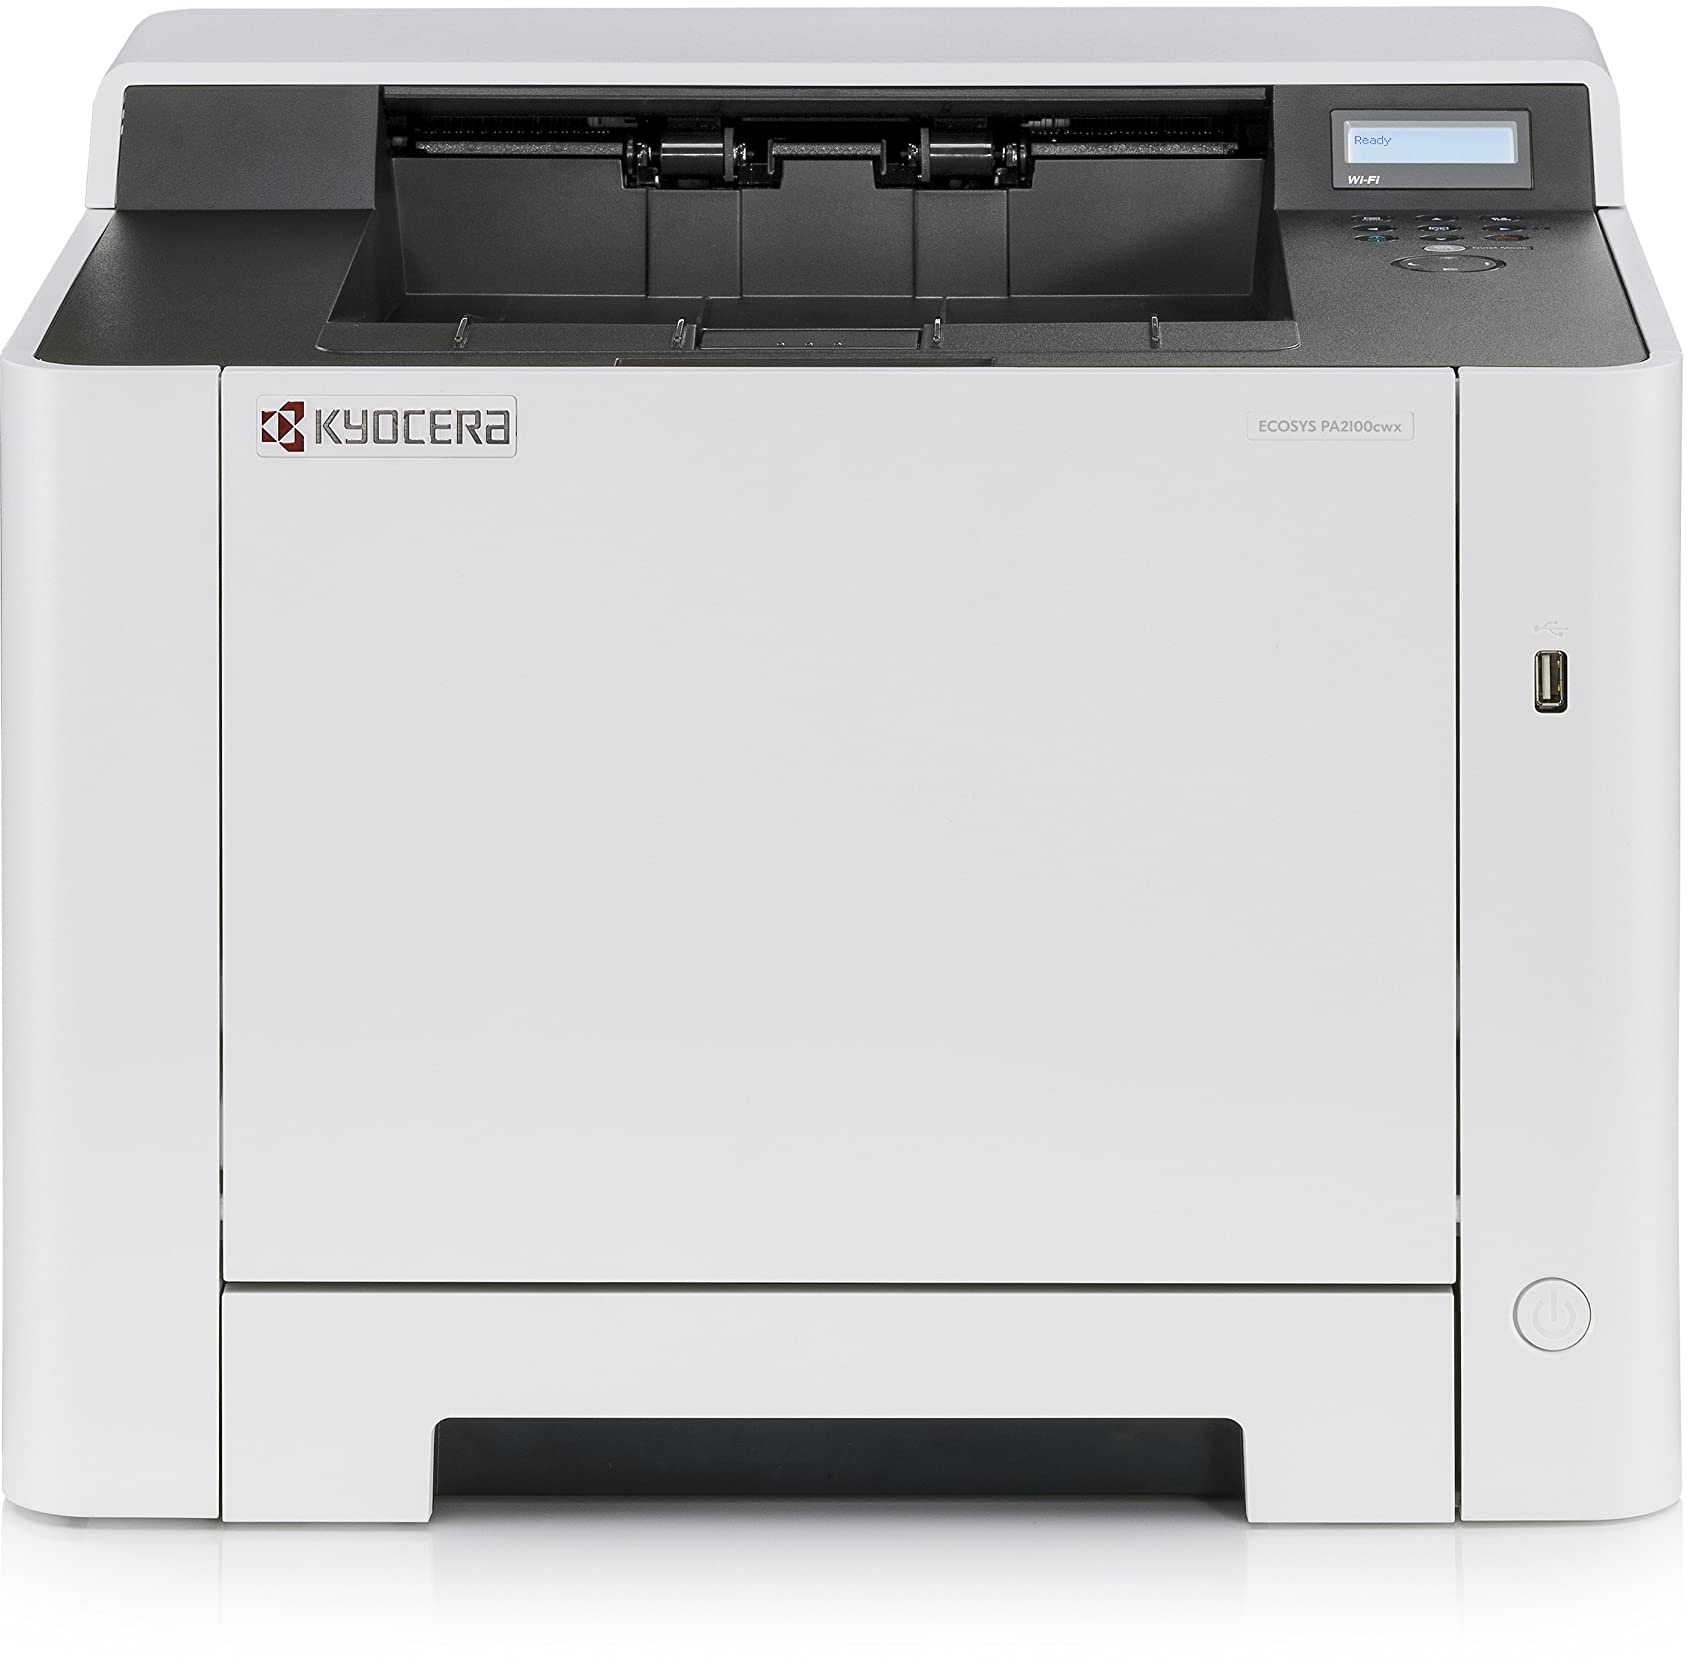 Kyocera Ecosys PA2100cwx Laserdrucker Farbe. Farbdrucker 21 Seiten pro Minute. WLAN Farblaserdrucker inkl. Mobile-Print-Unterstützung